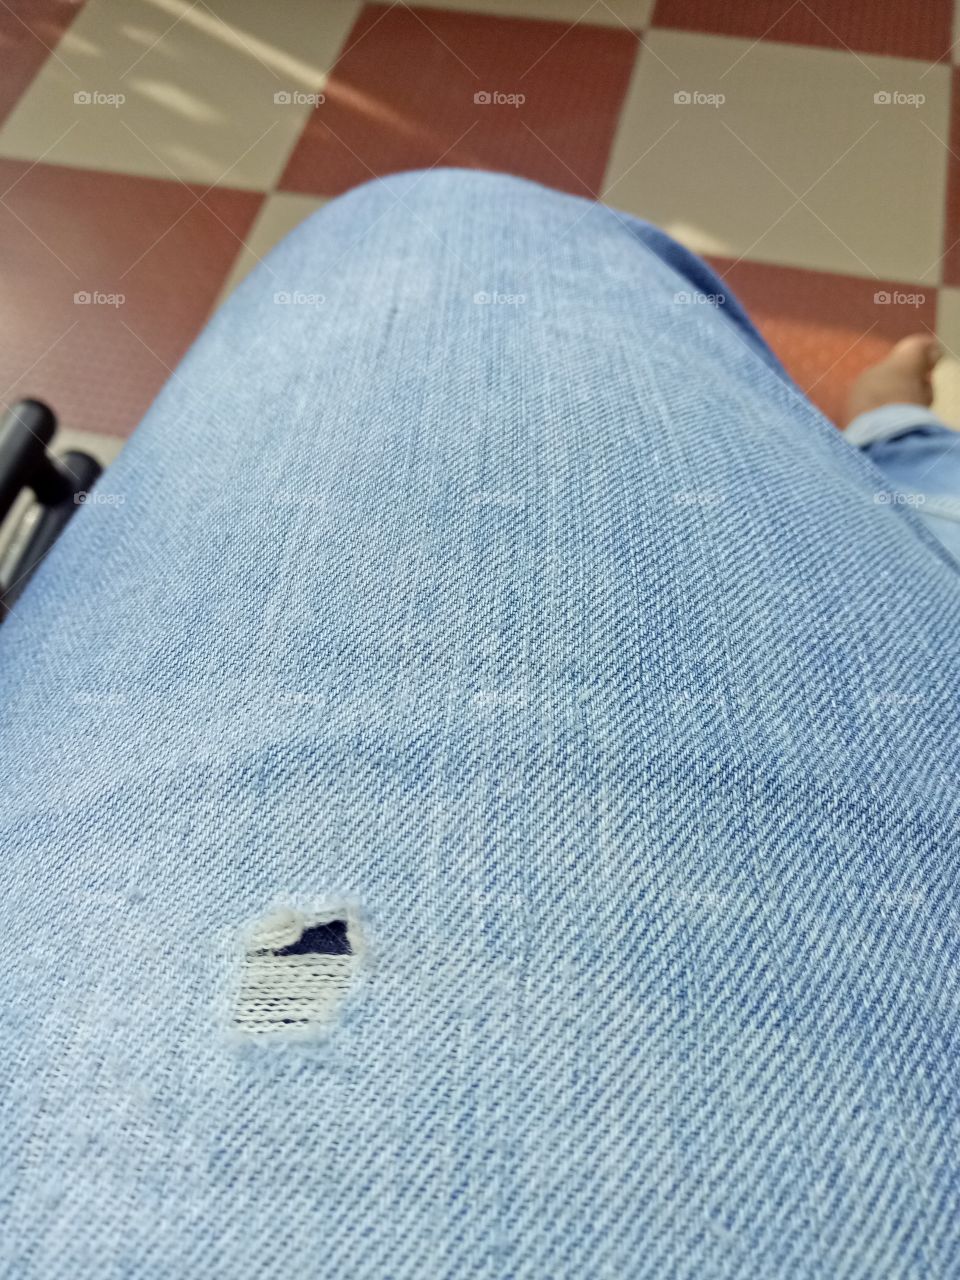 Blue jeans view